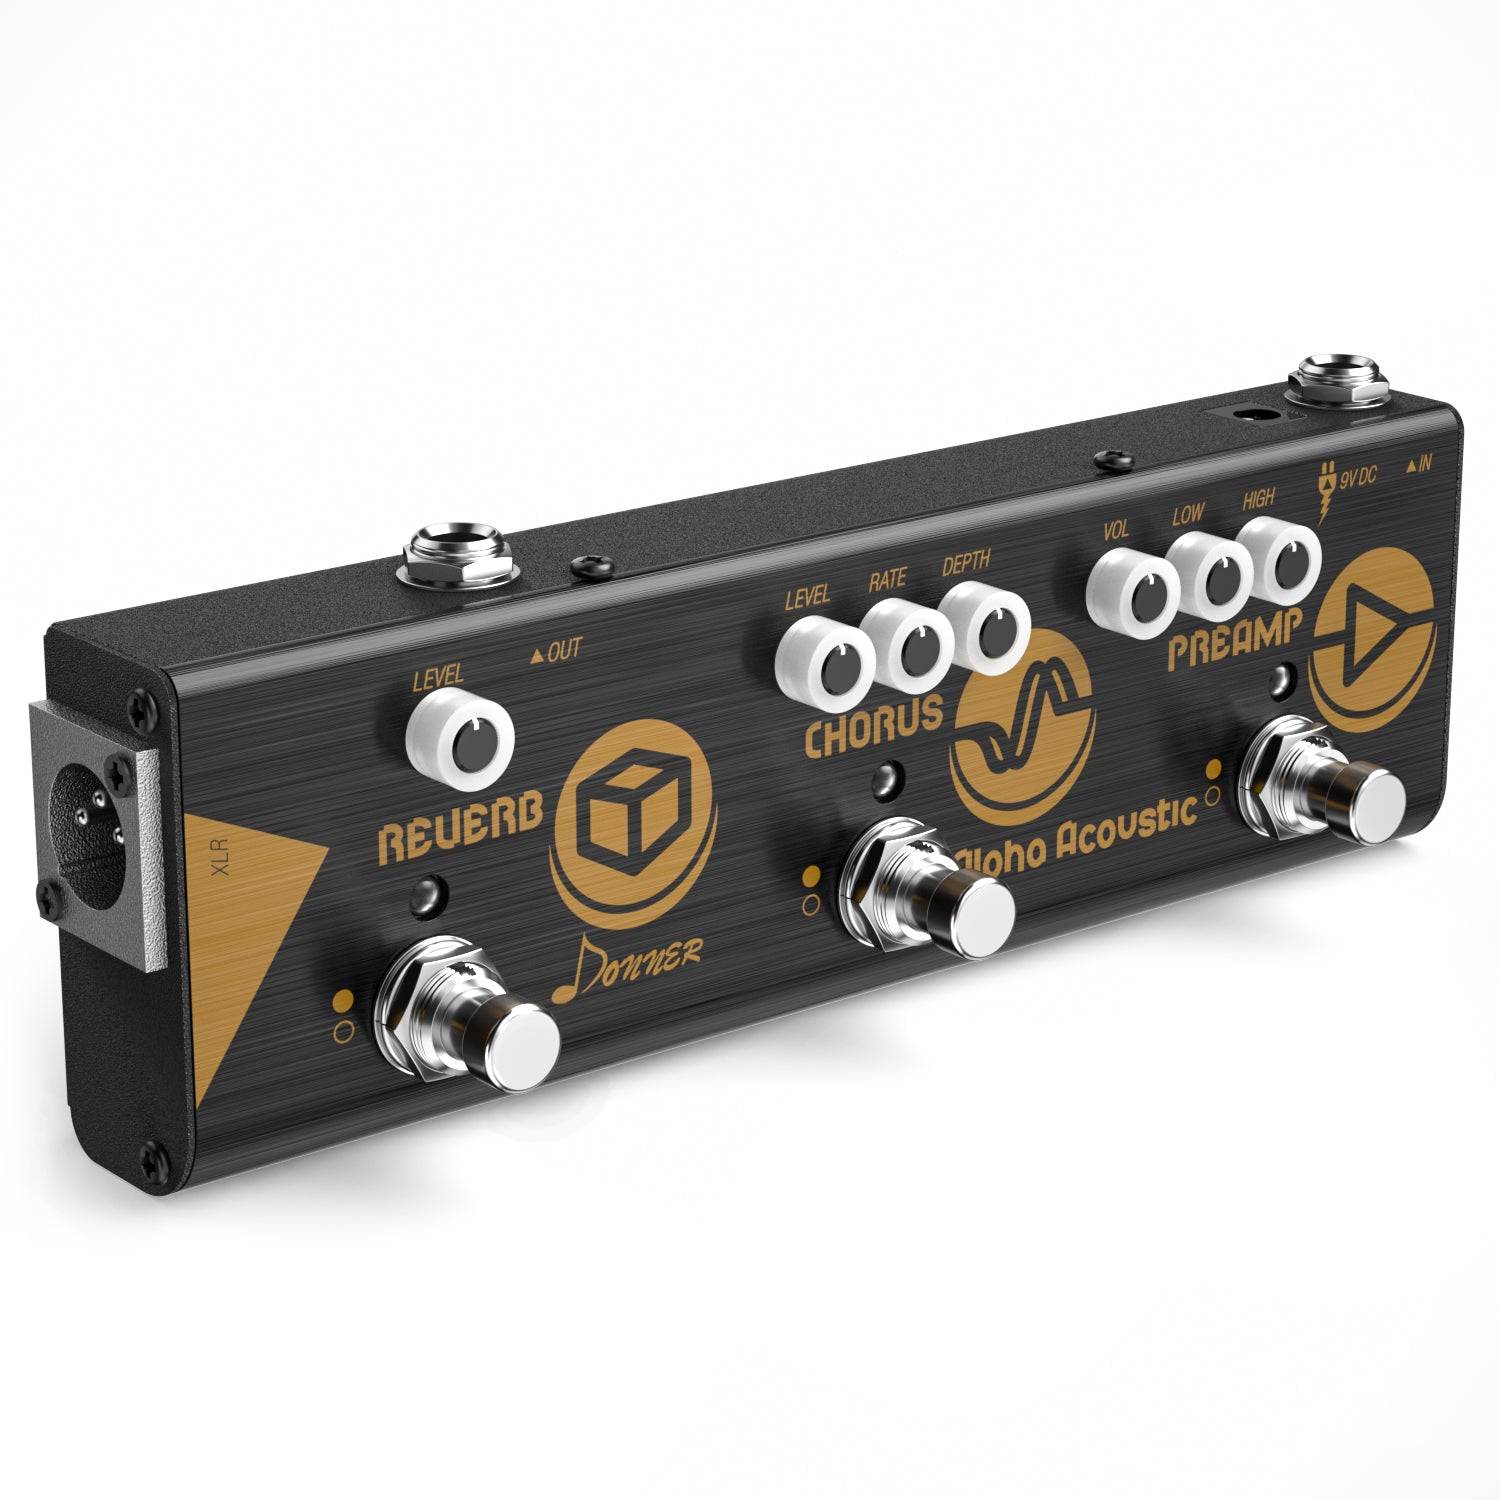 

Donner Alpha Acoustic 3 Mode Multi-Effect Compact Guitar Pedal Preamp Chorus Reverb